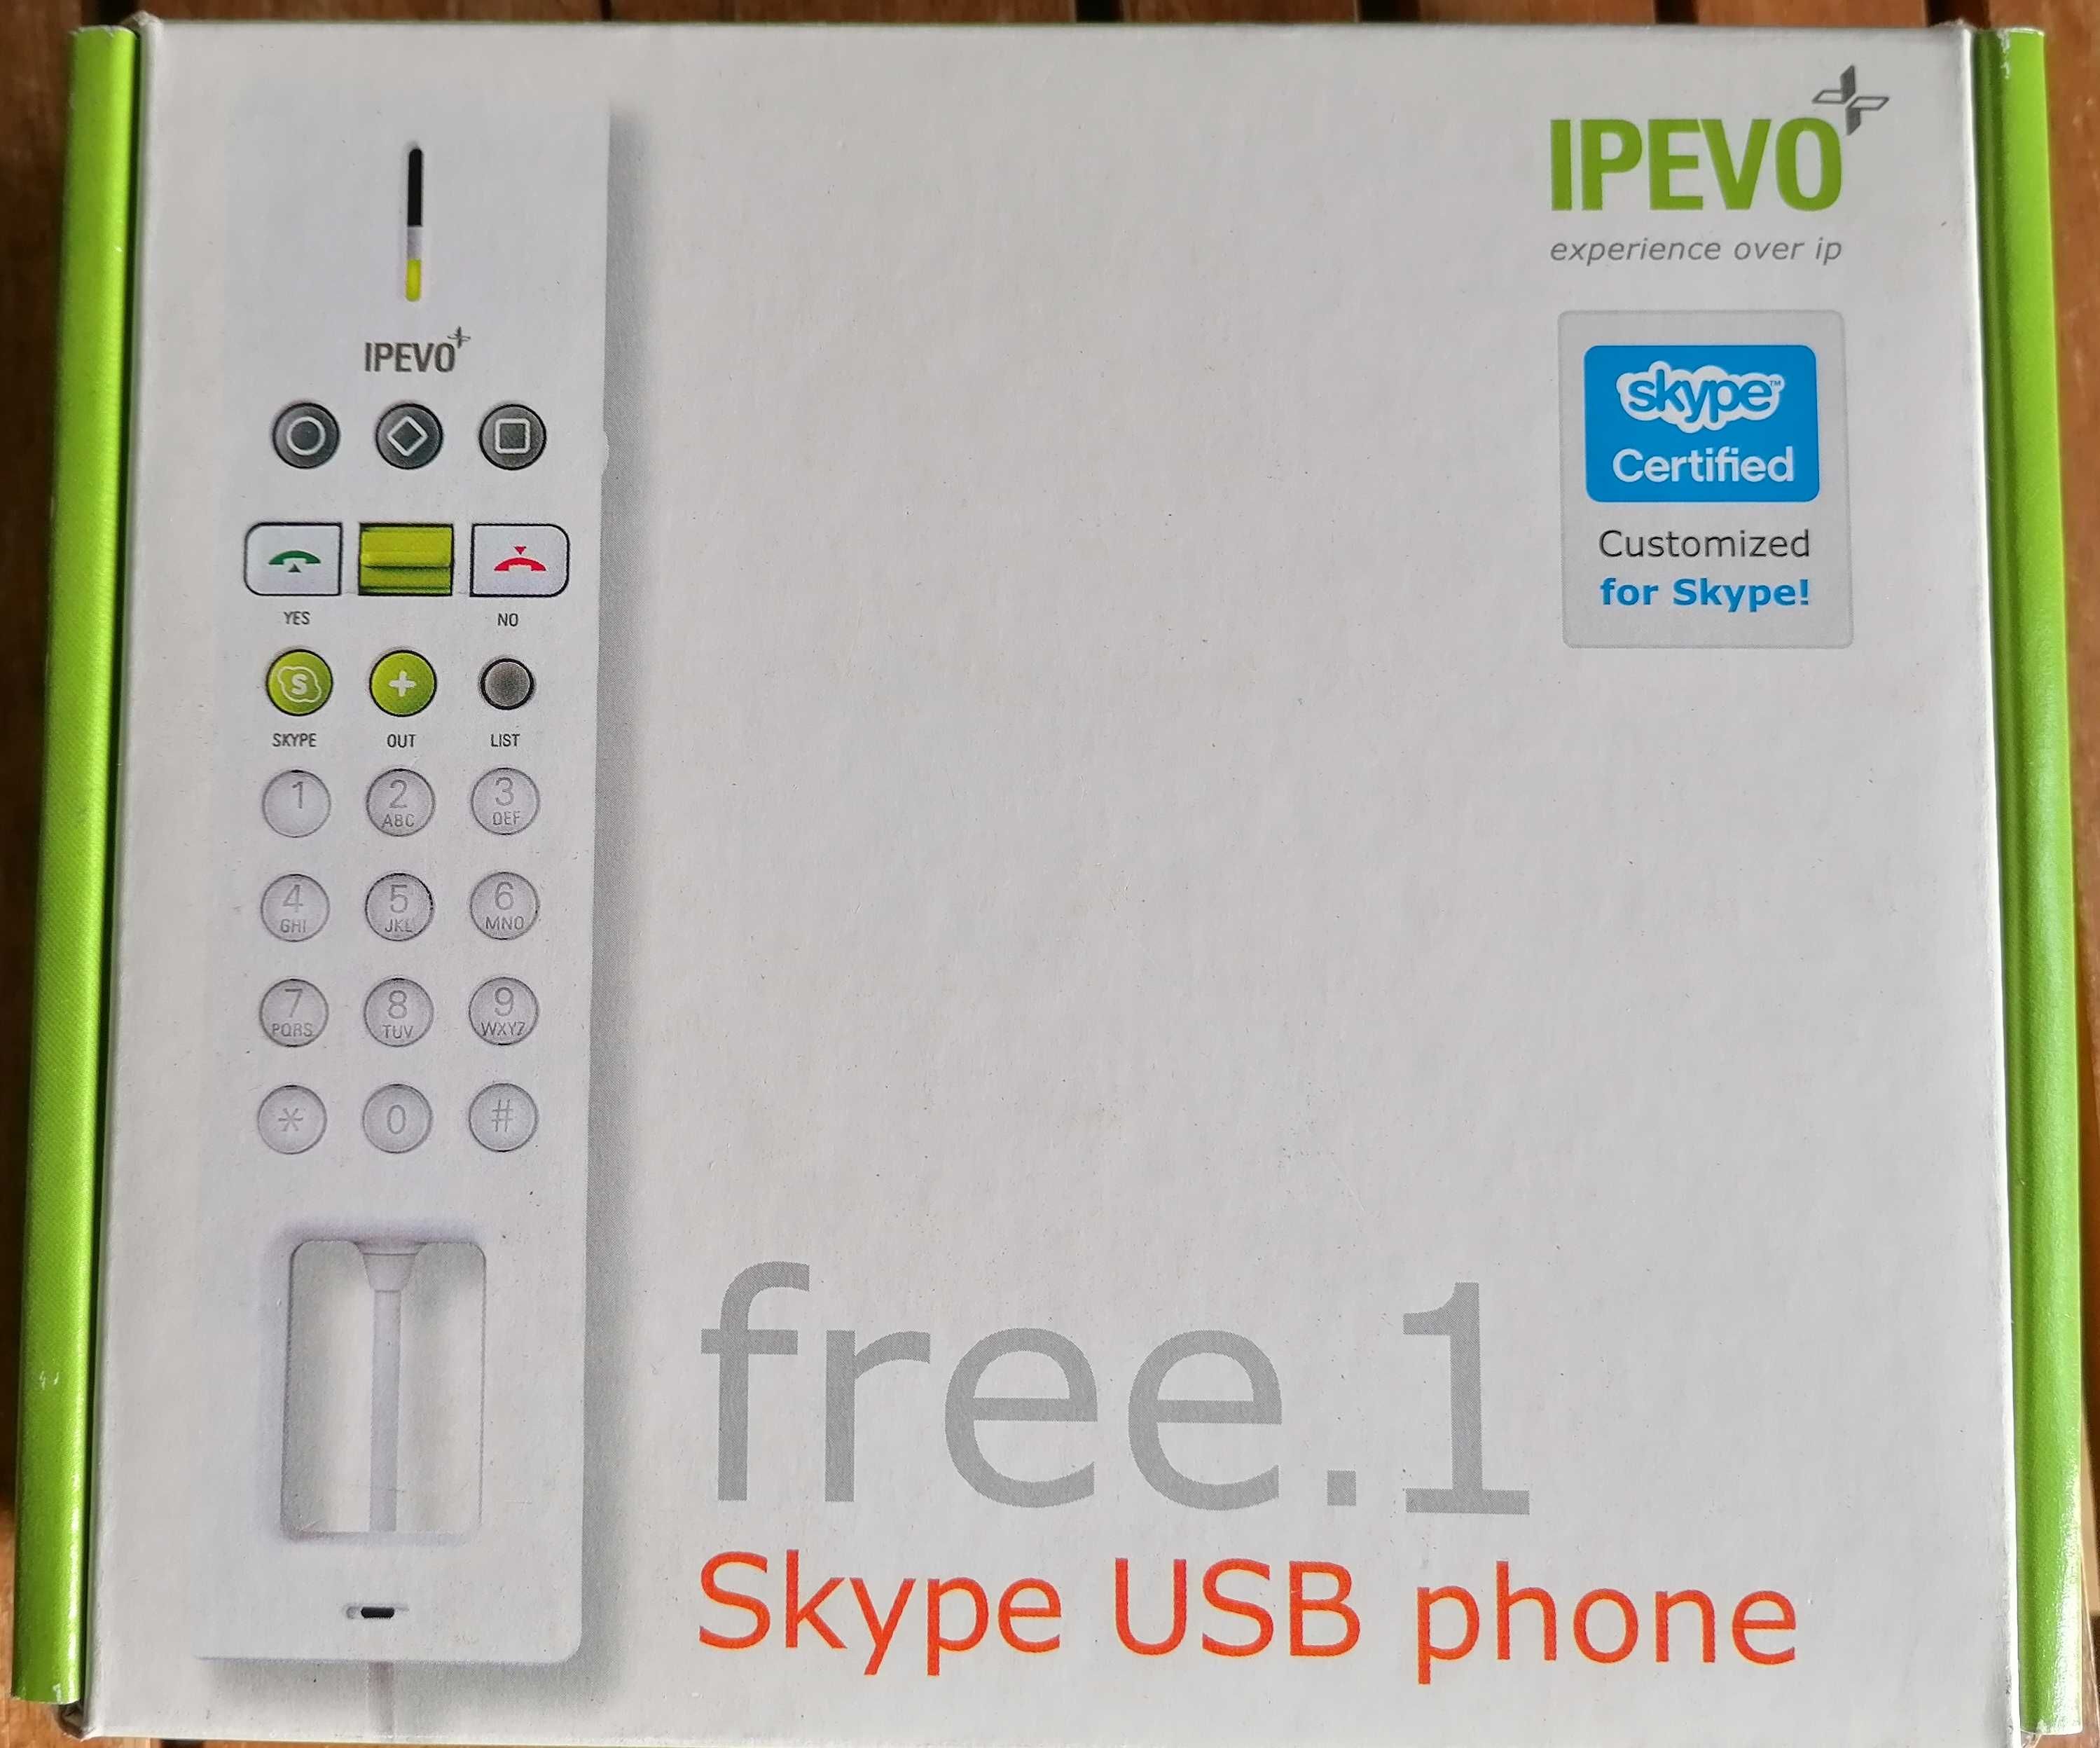 Telefone USB Skype - IPEVO